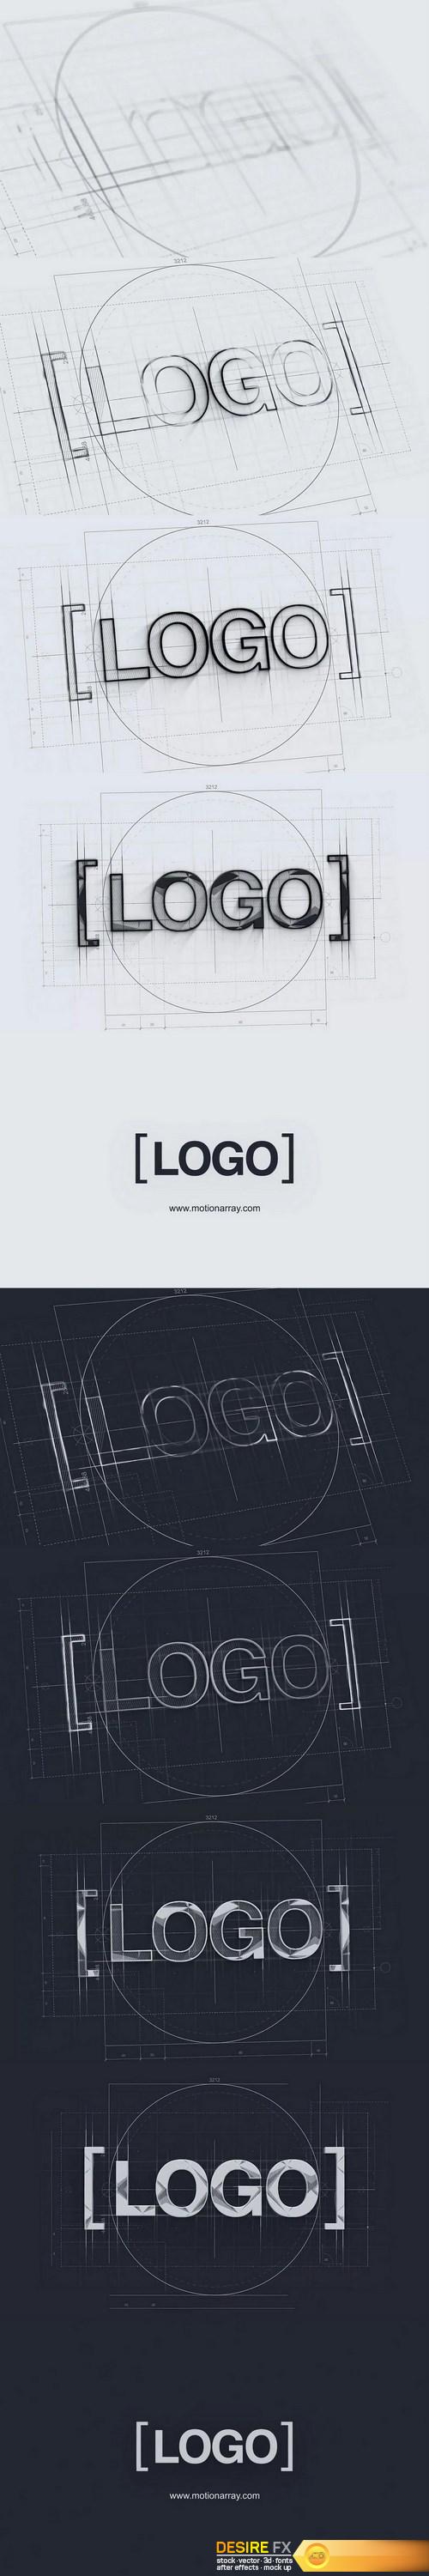 Technical-sketch-logo-34507